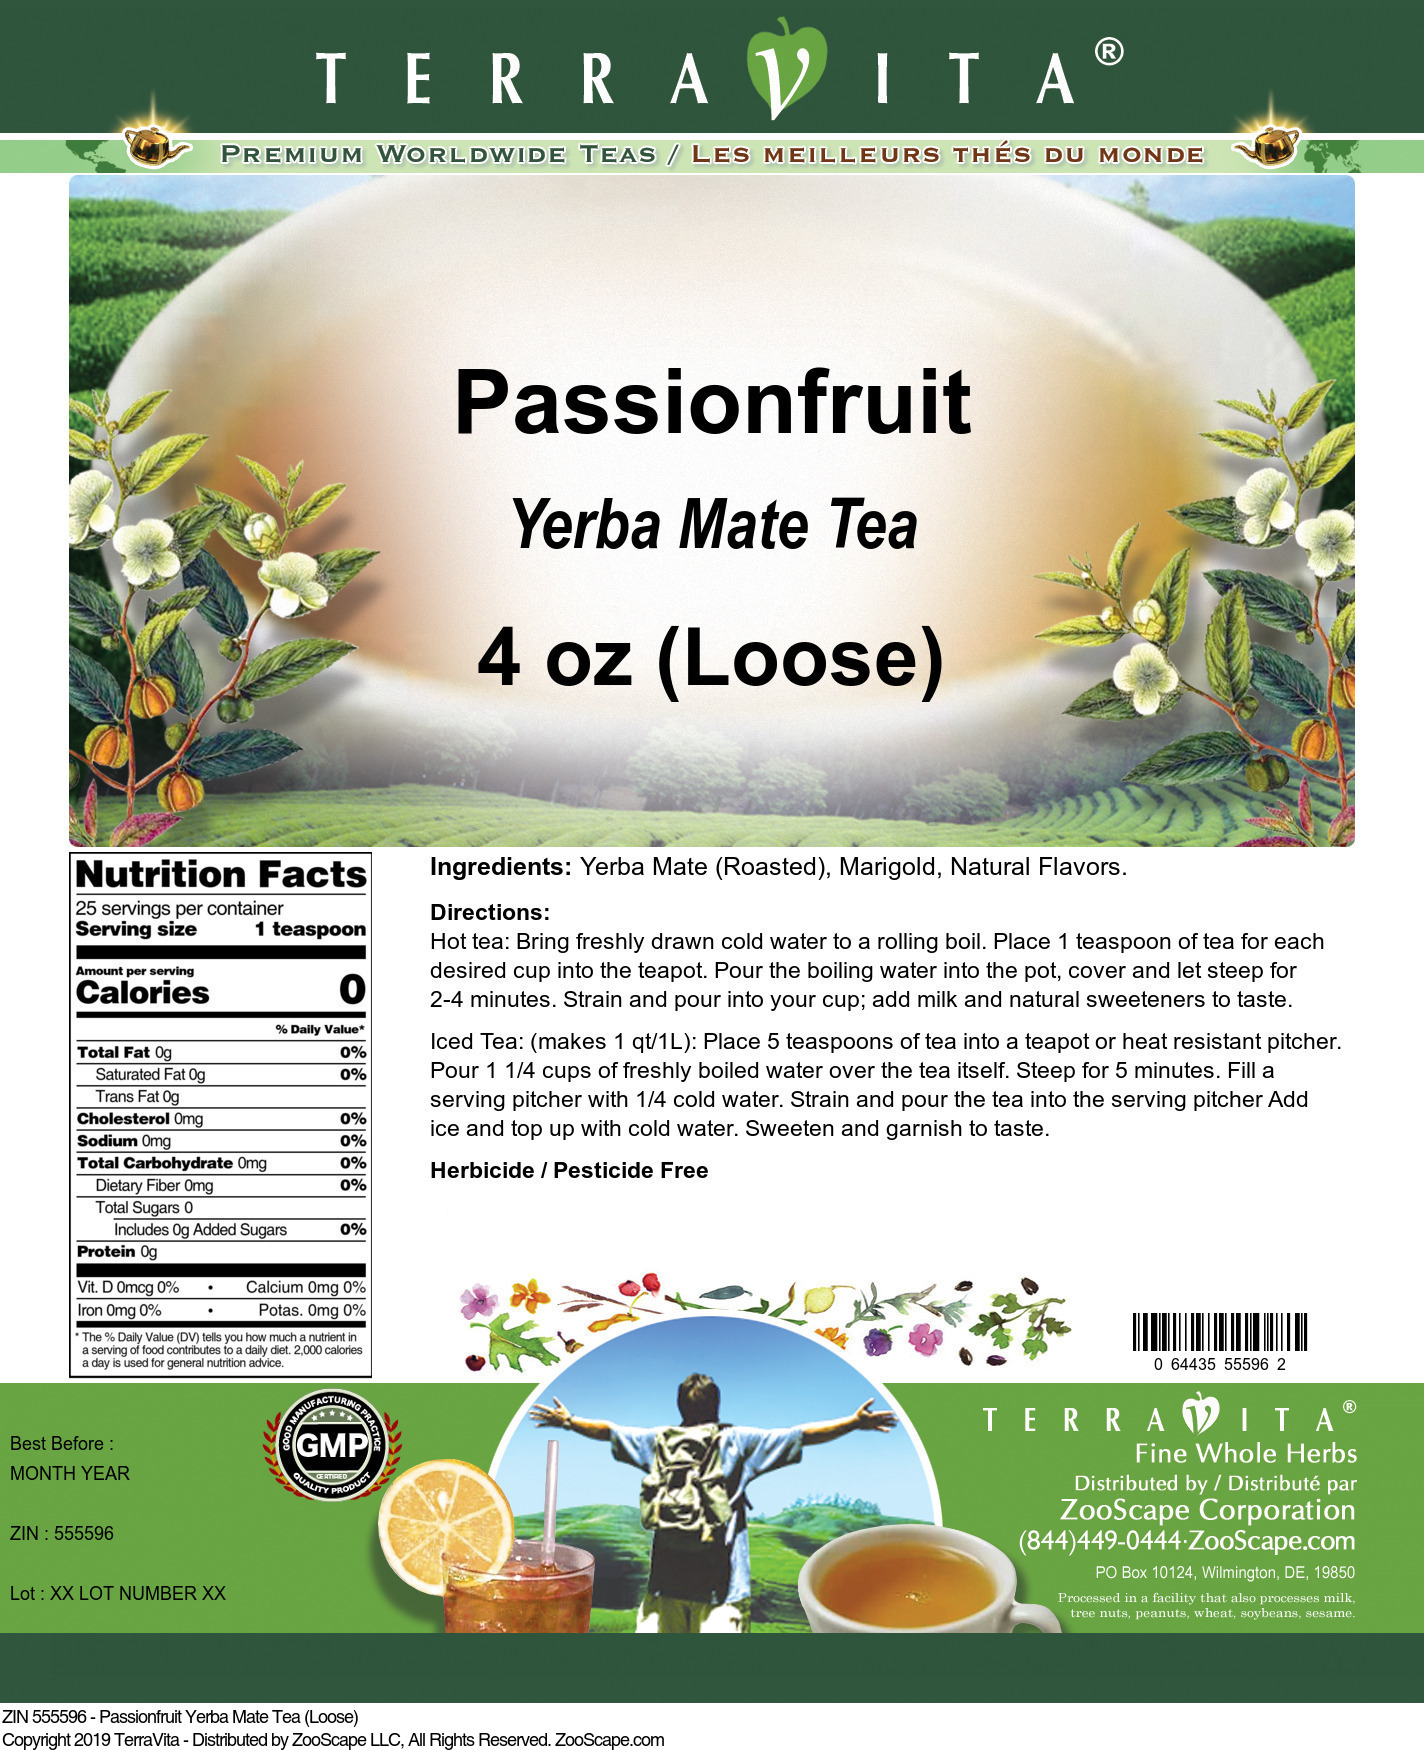 Passionfruit Yerba Mate Tea (Loose) - Label